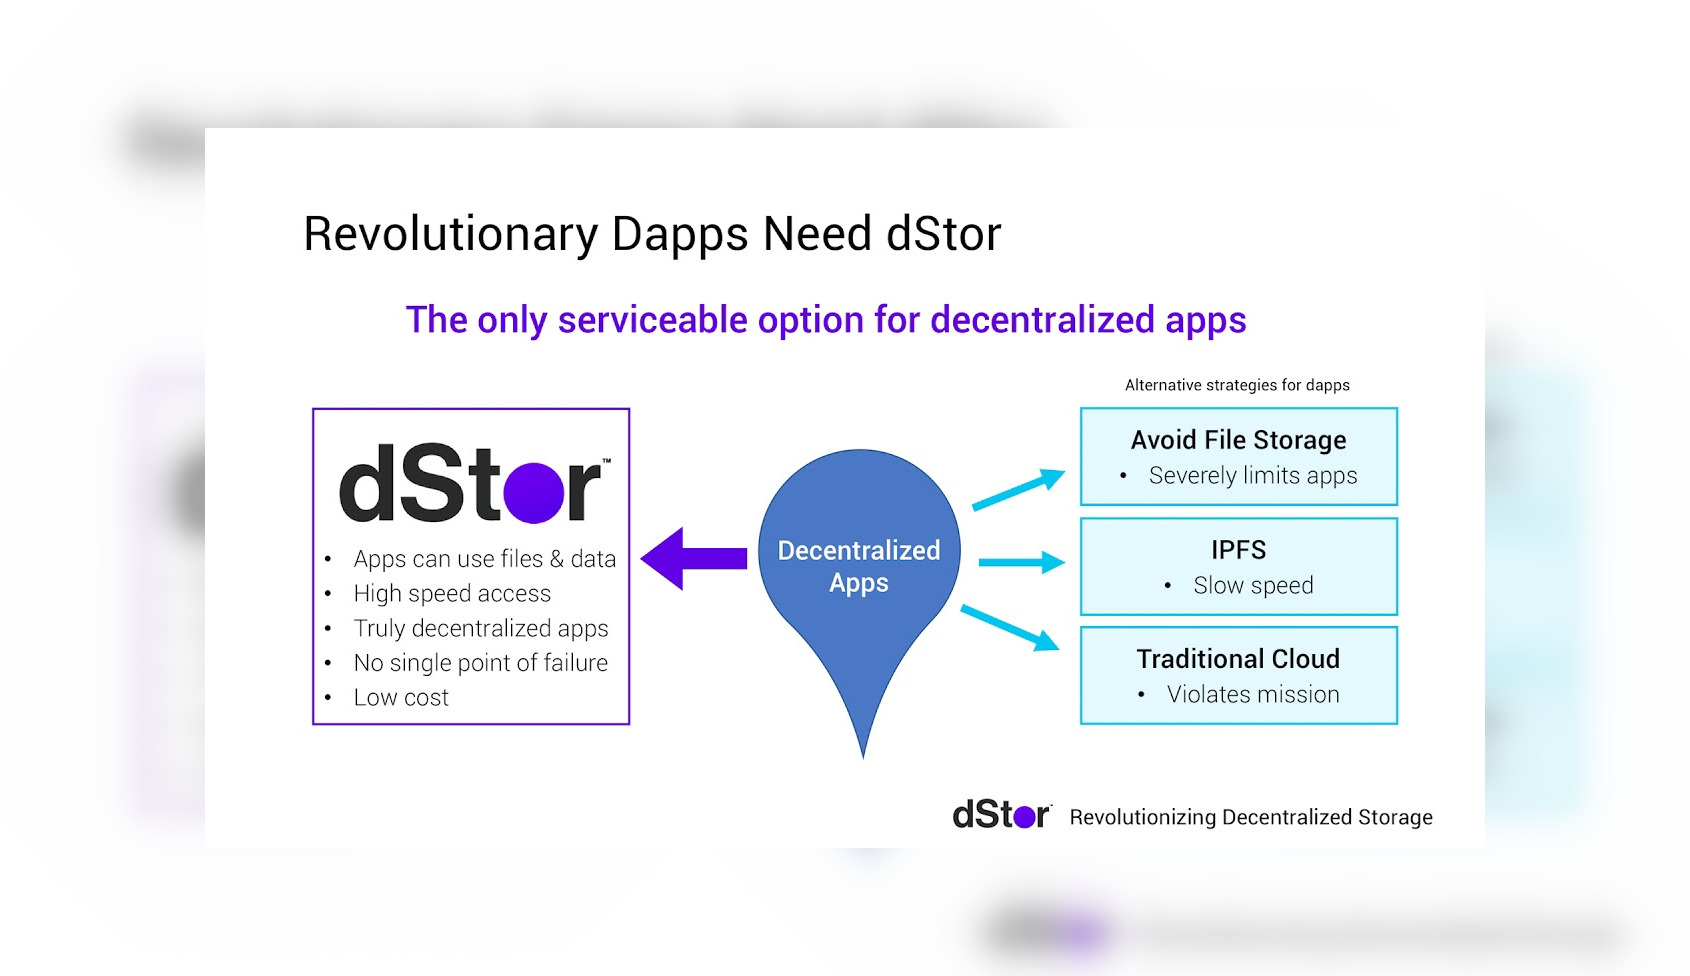 dStor Revolutionary Decentralized Storage announced